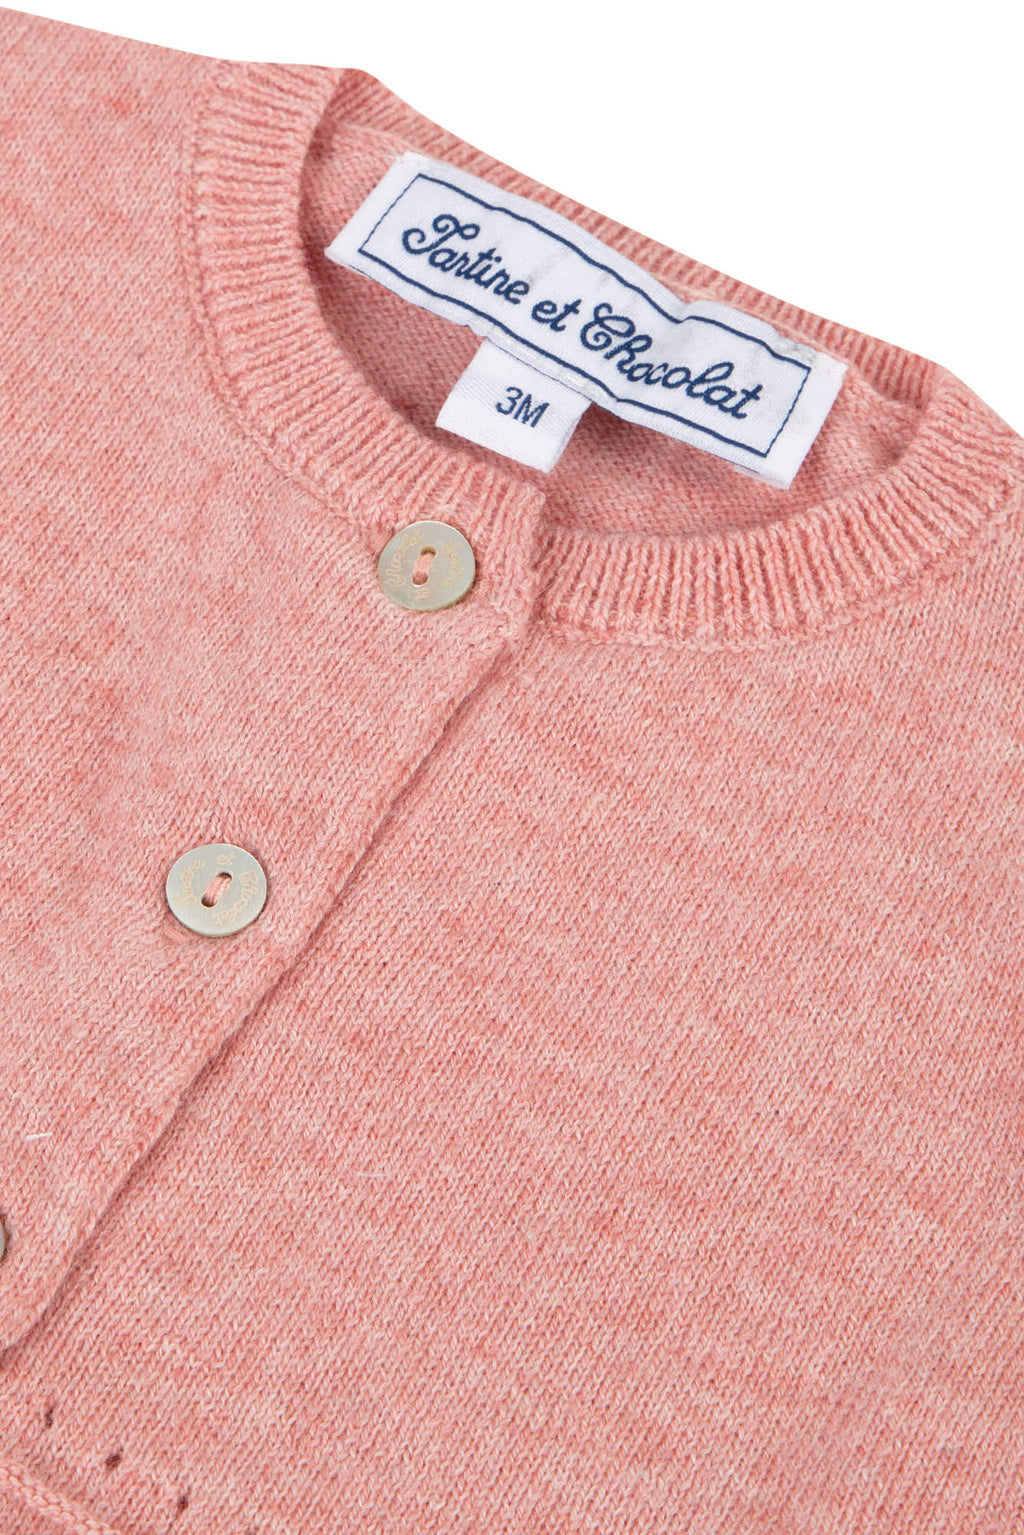 Cardigan - Pink medium cotton Wool